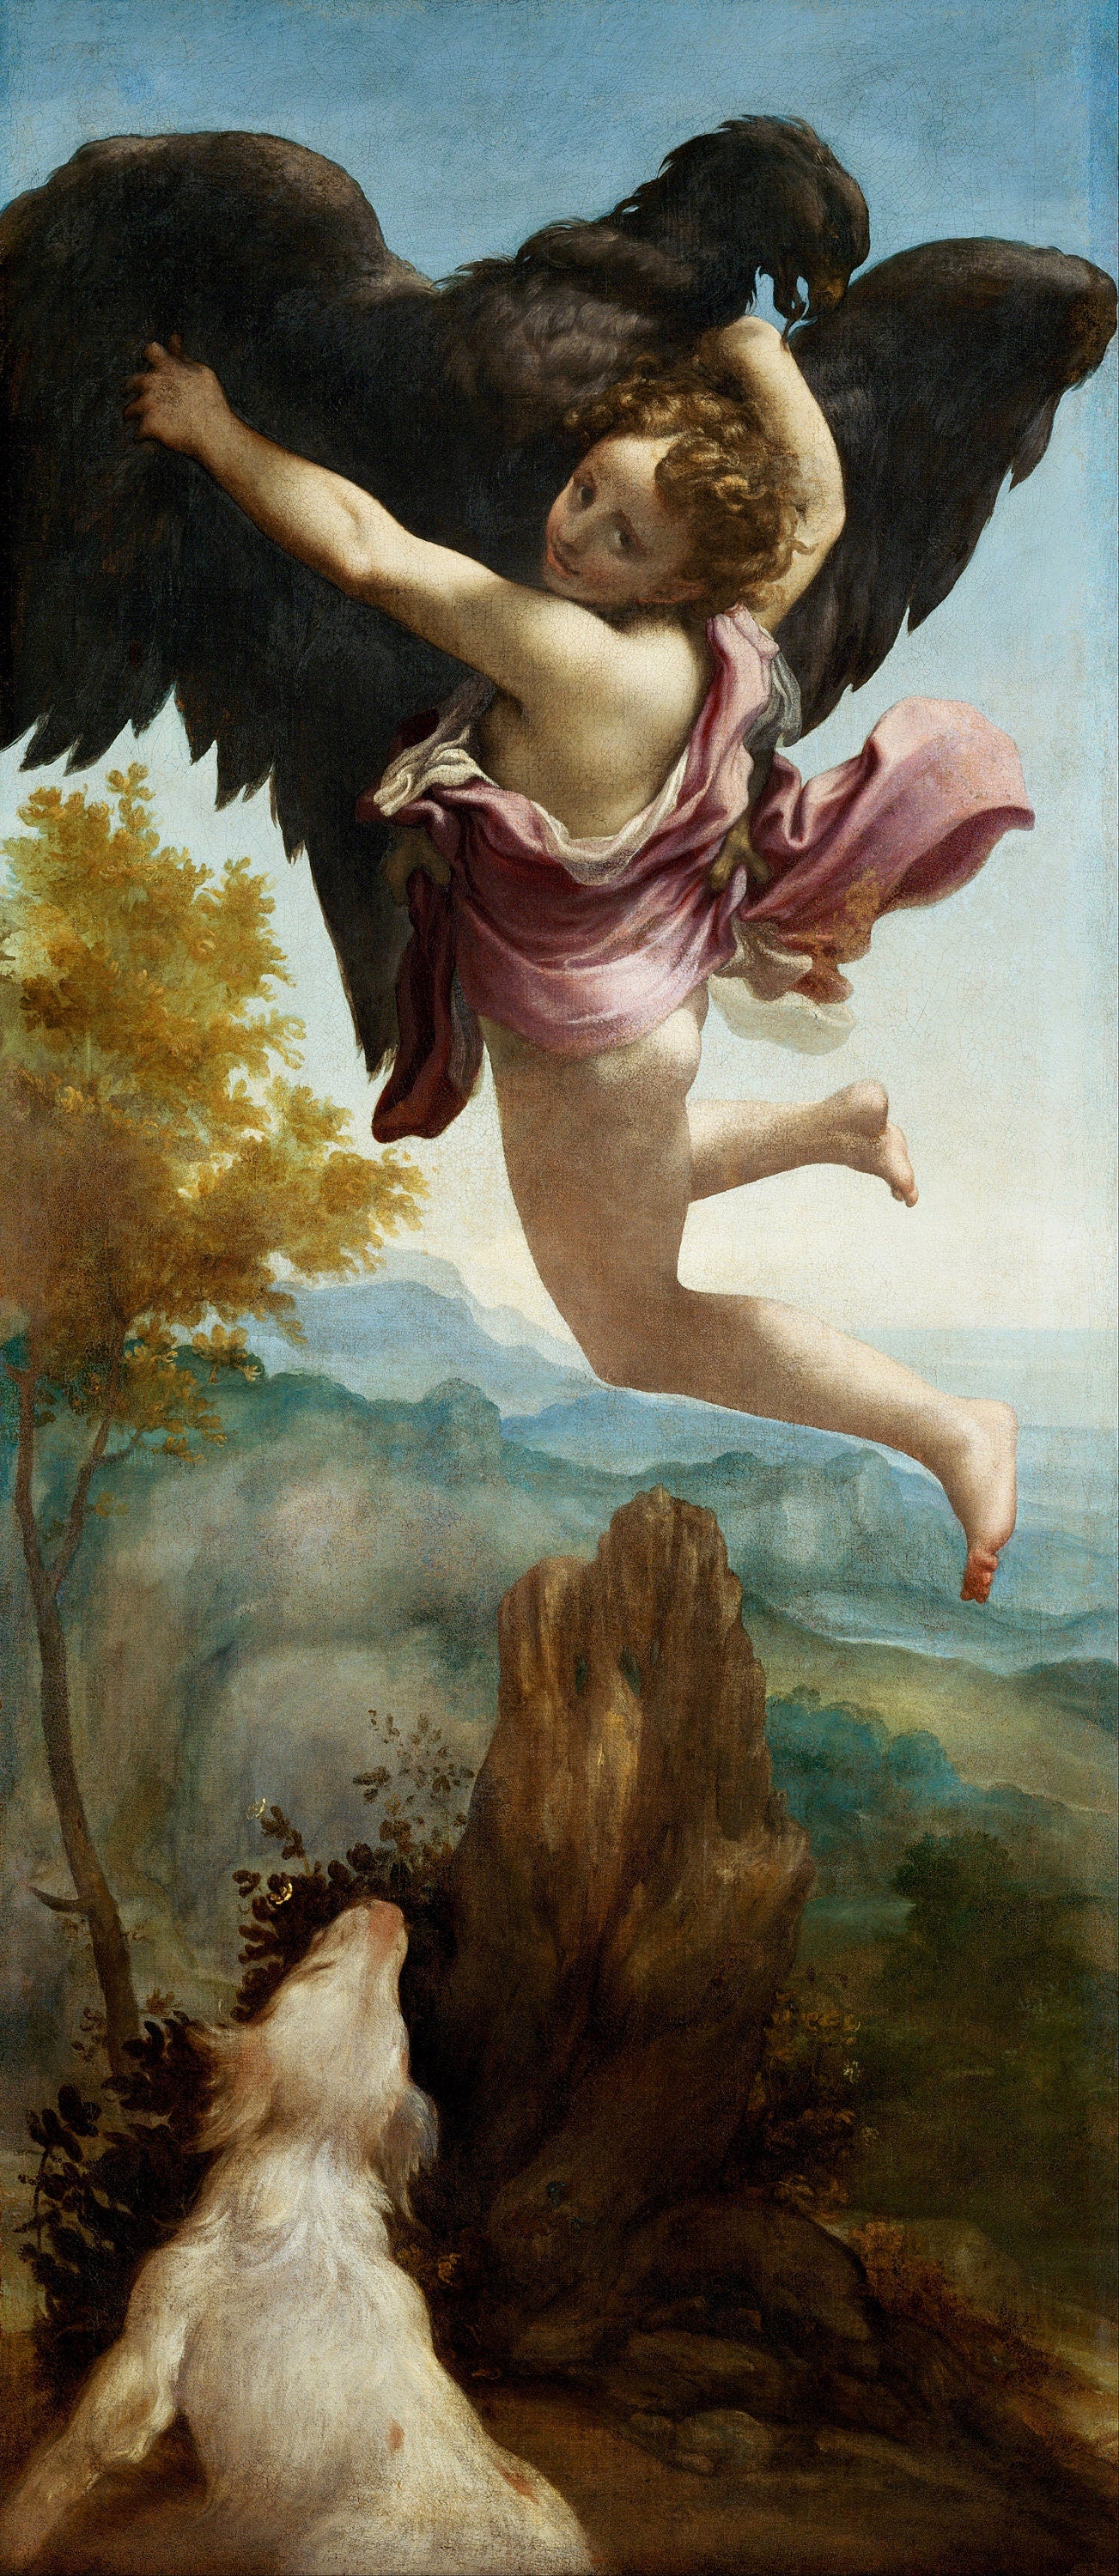 Correggio Renaissance Paintings [26 Images]